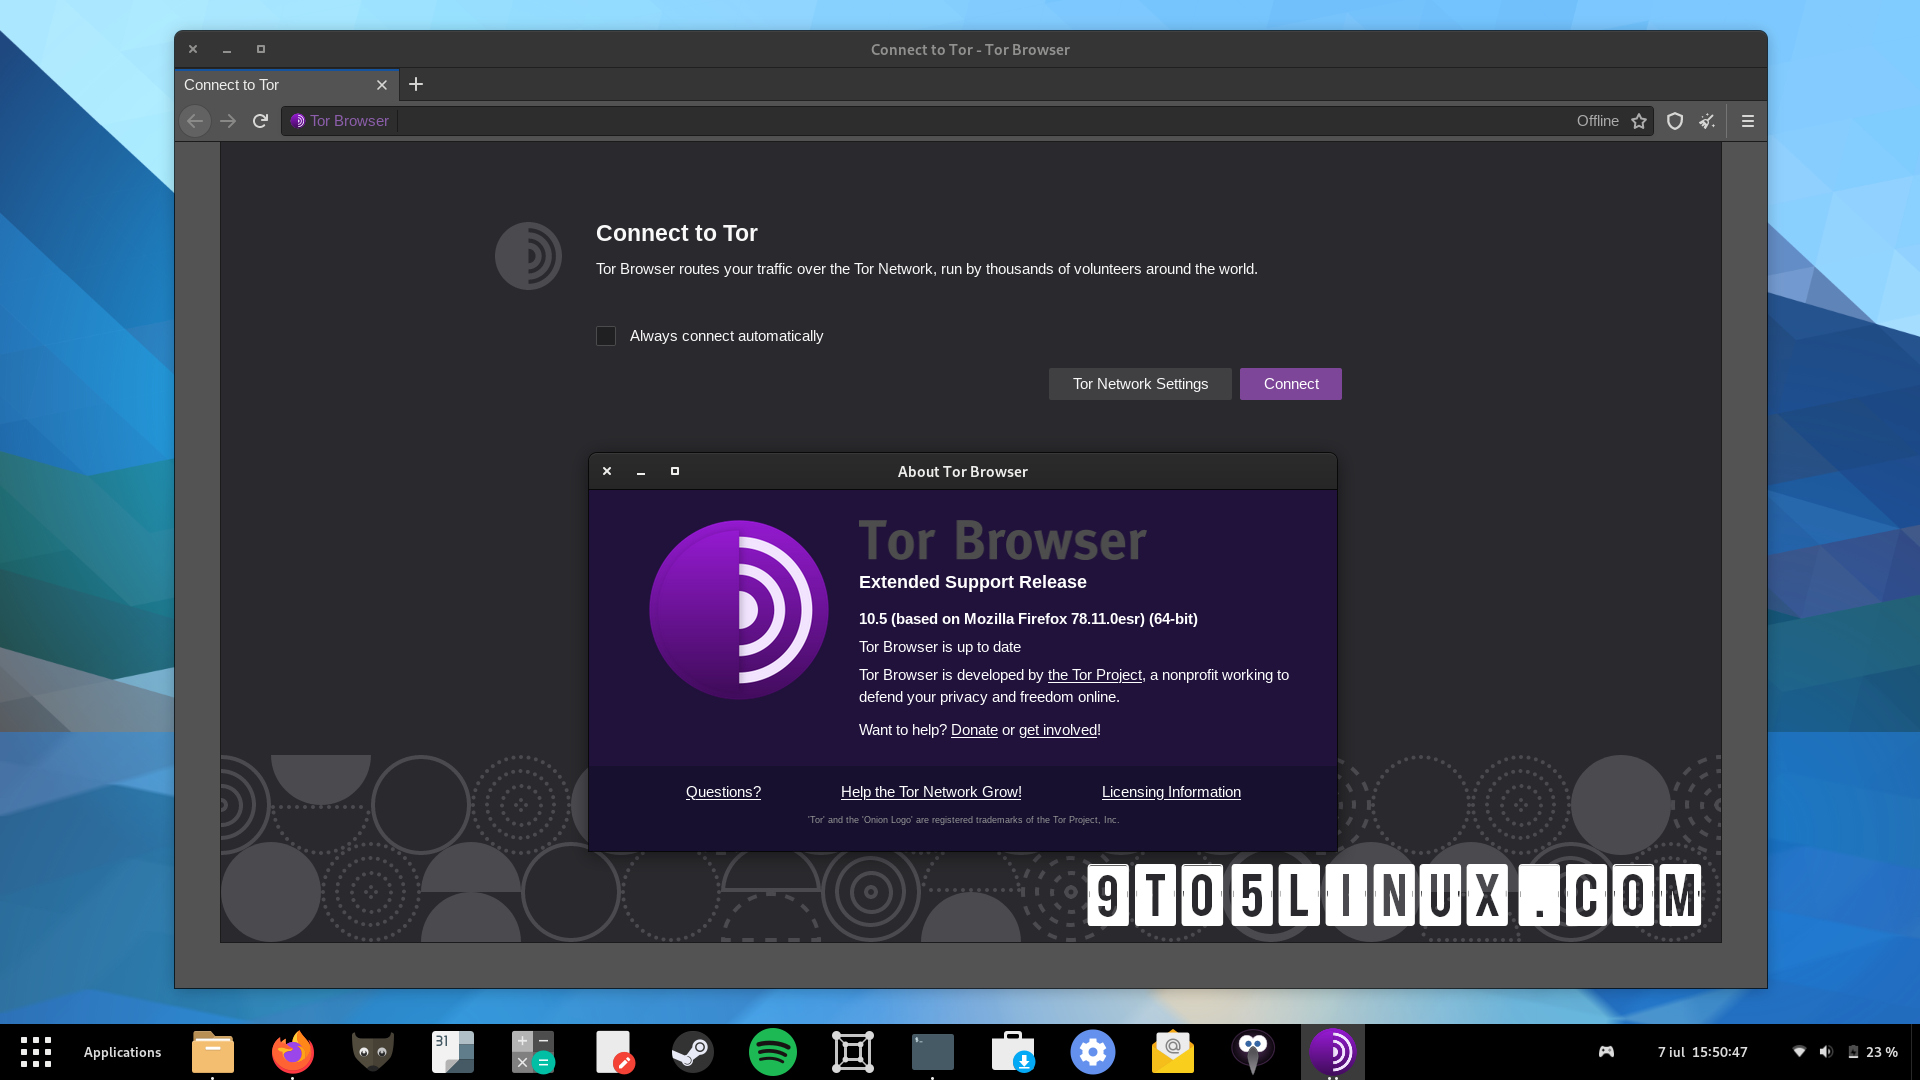 Tor browser anonim hydra tor browser rus торрент hyrda вход